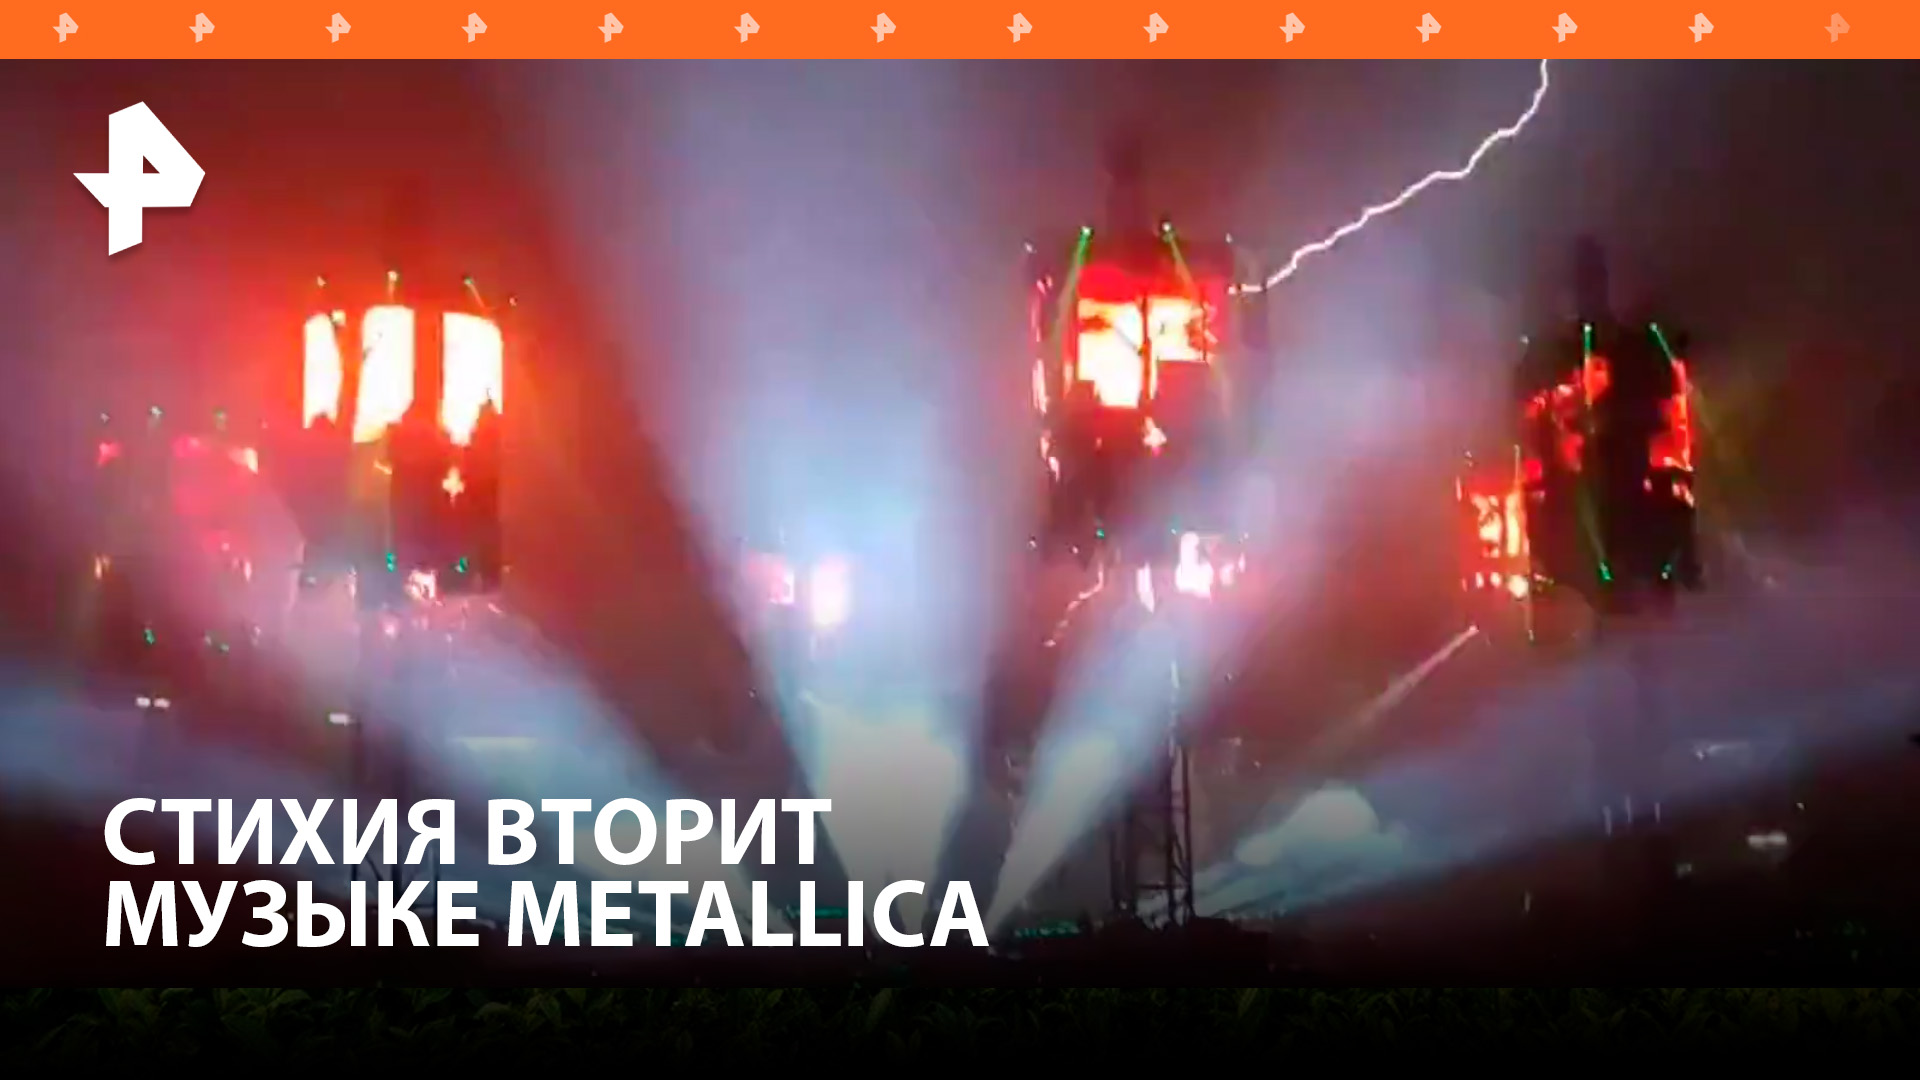 Разряд молний ударил в финале концерта Metallica в Мюнхене / РЕН Новости